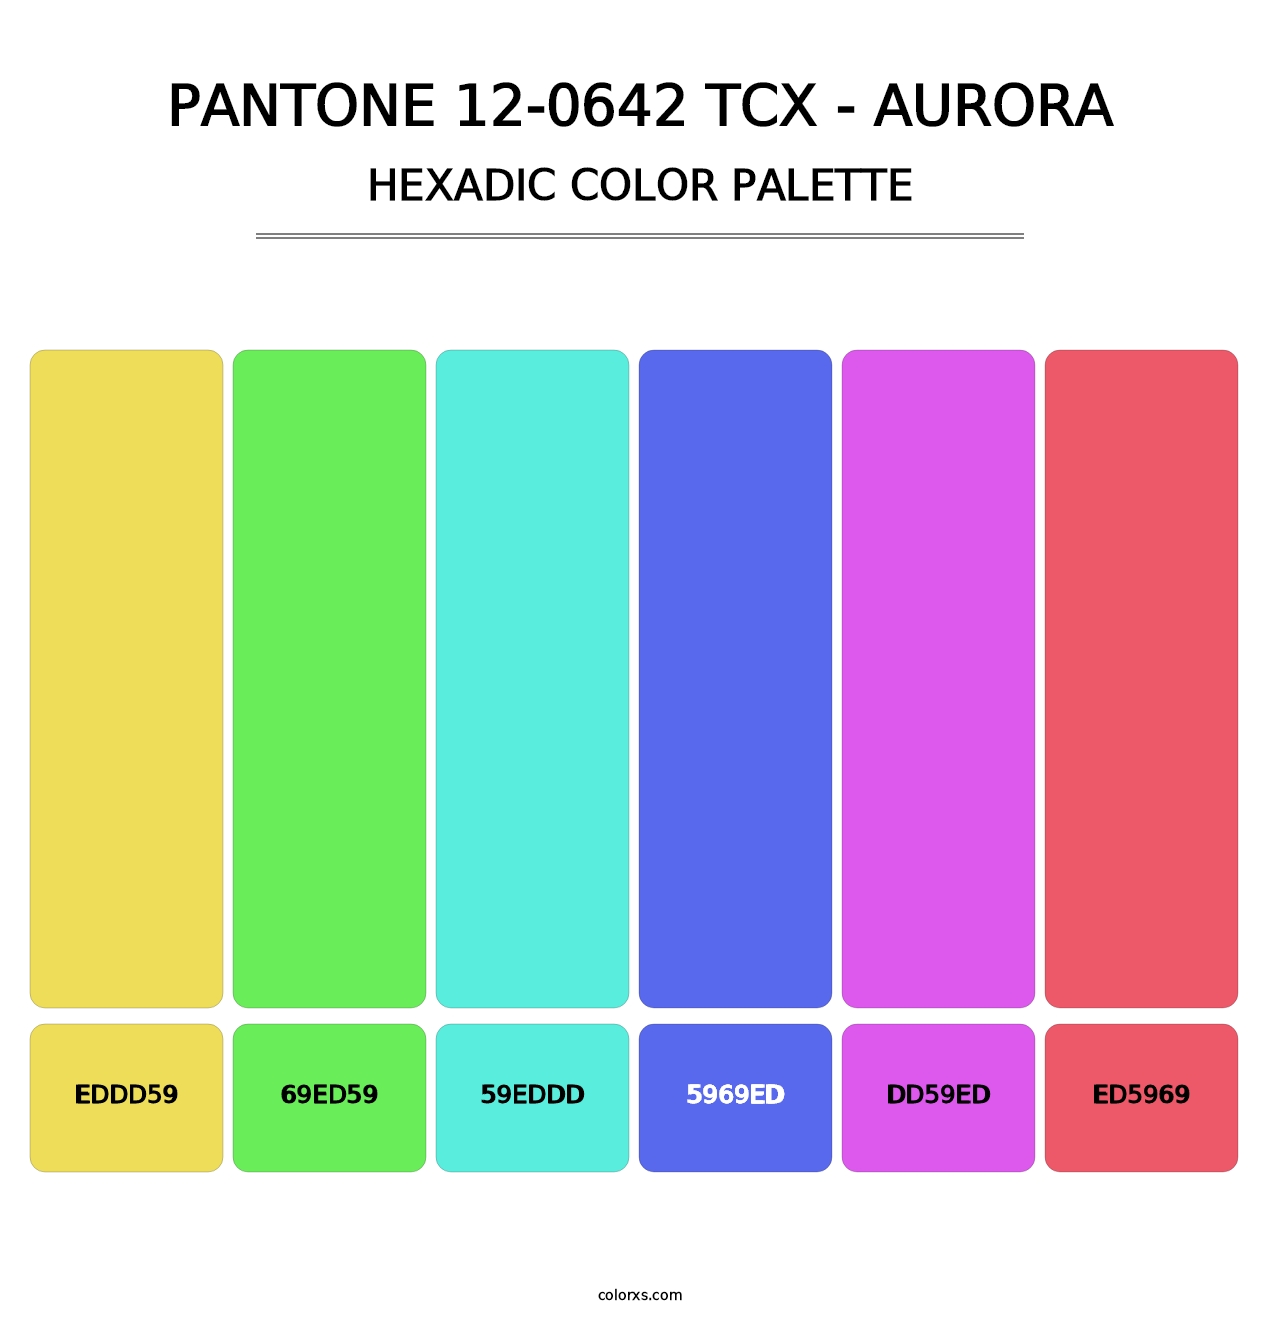 PANTONE 12-0642 TCX - Aurora - Hexadic Color Palette